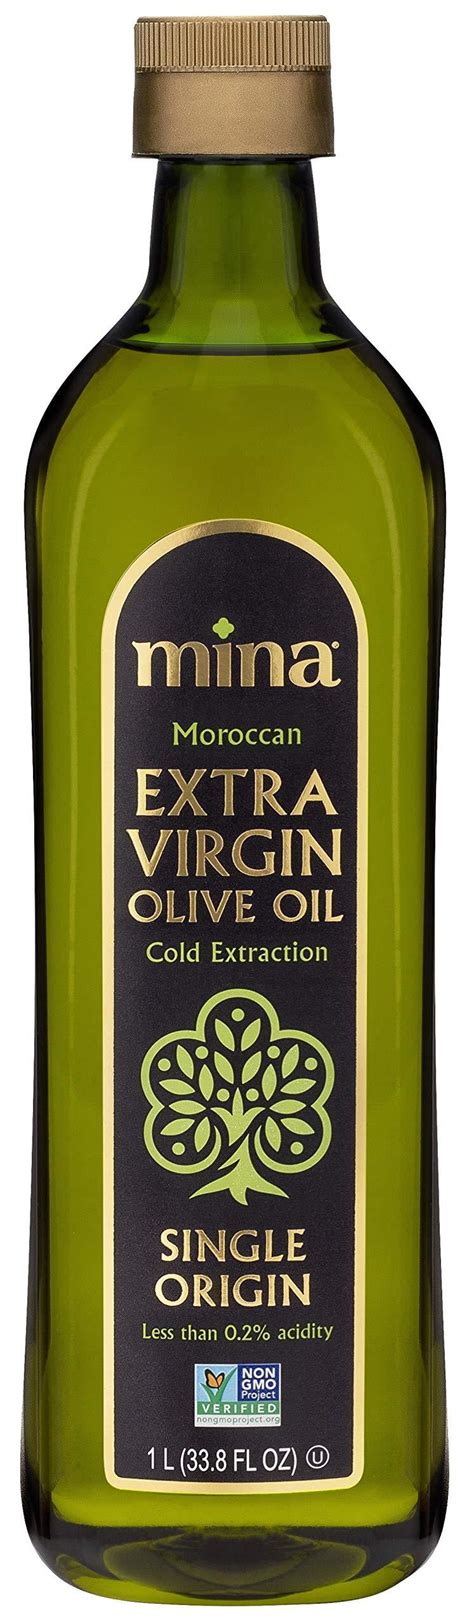 Mina Extra Virgin Olive Oil Single Origin Gourmet Moroccan Olive Oil